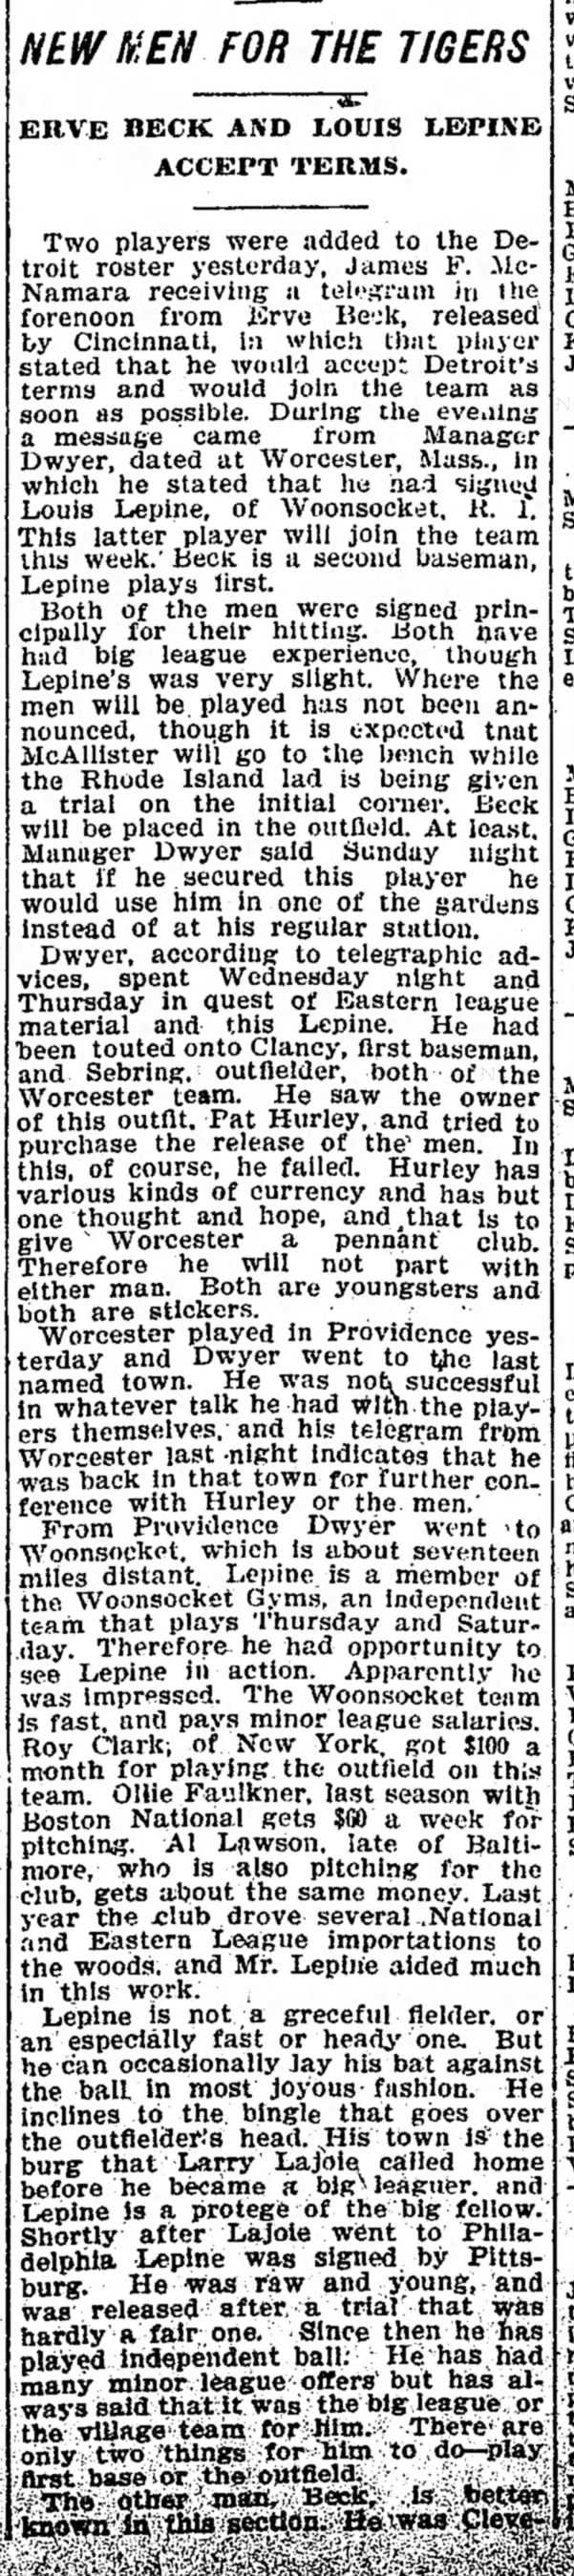 Fri 7/18/1902: Tigers sign LePine